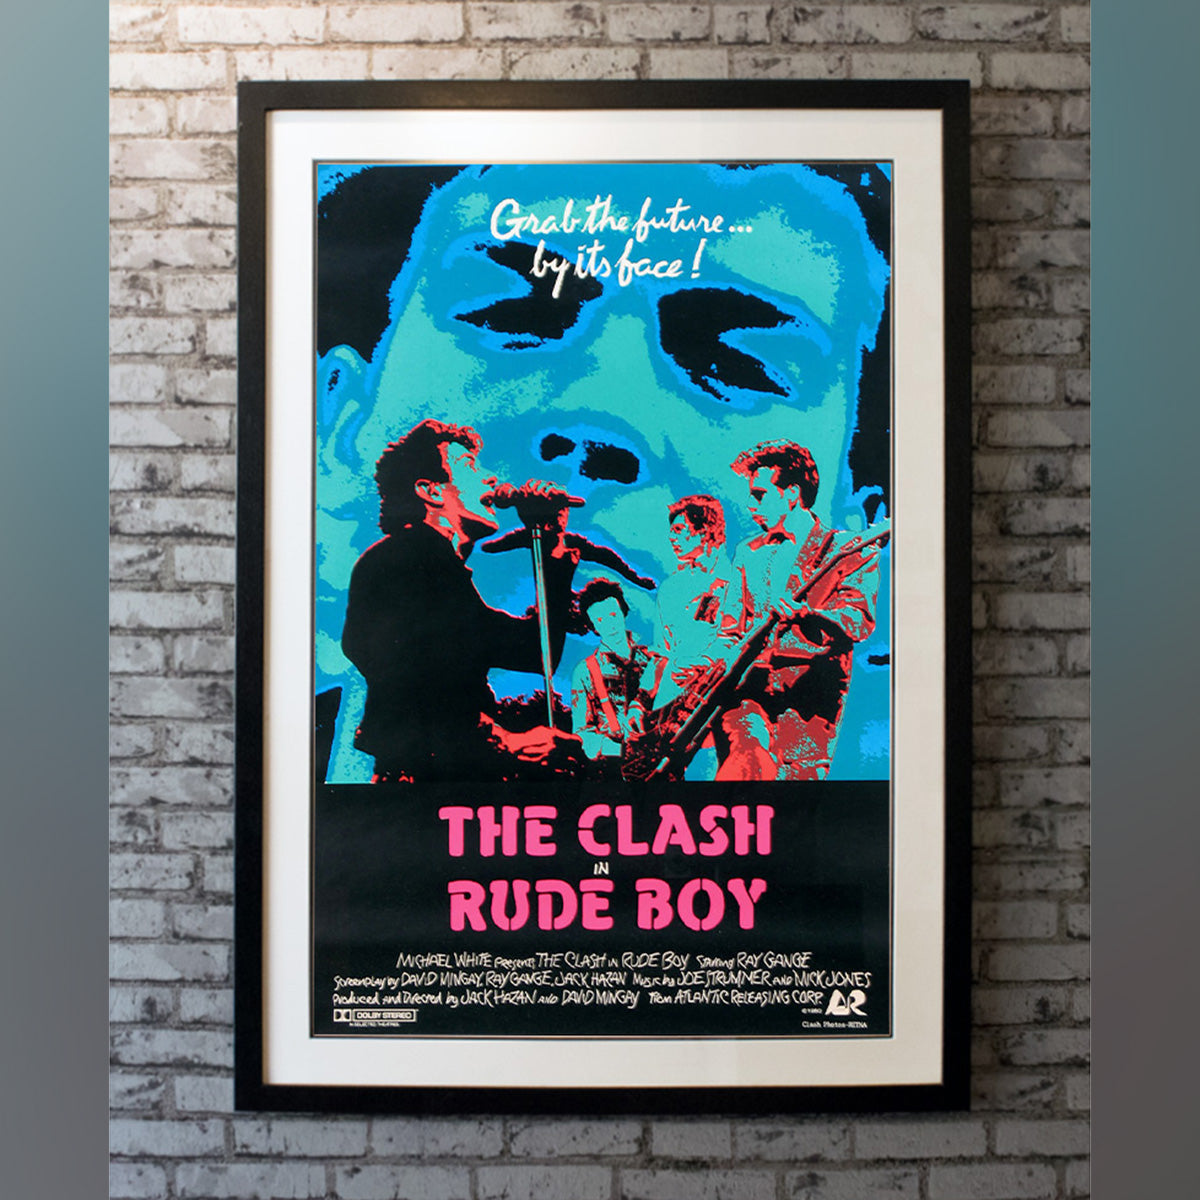 Original Movie Poster of Rude Boy (1980)